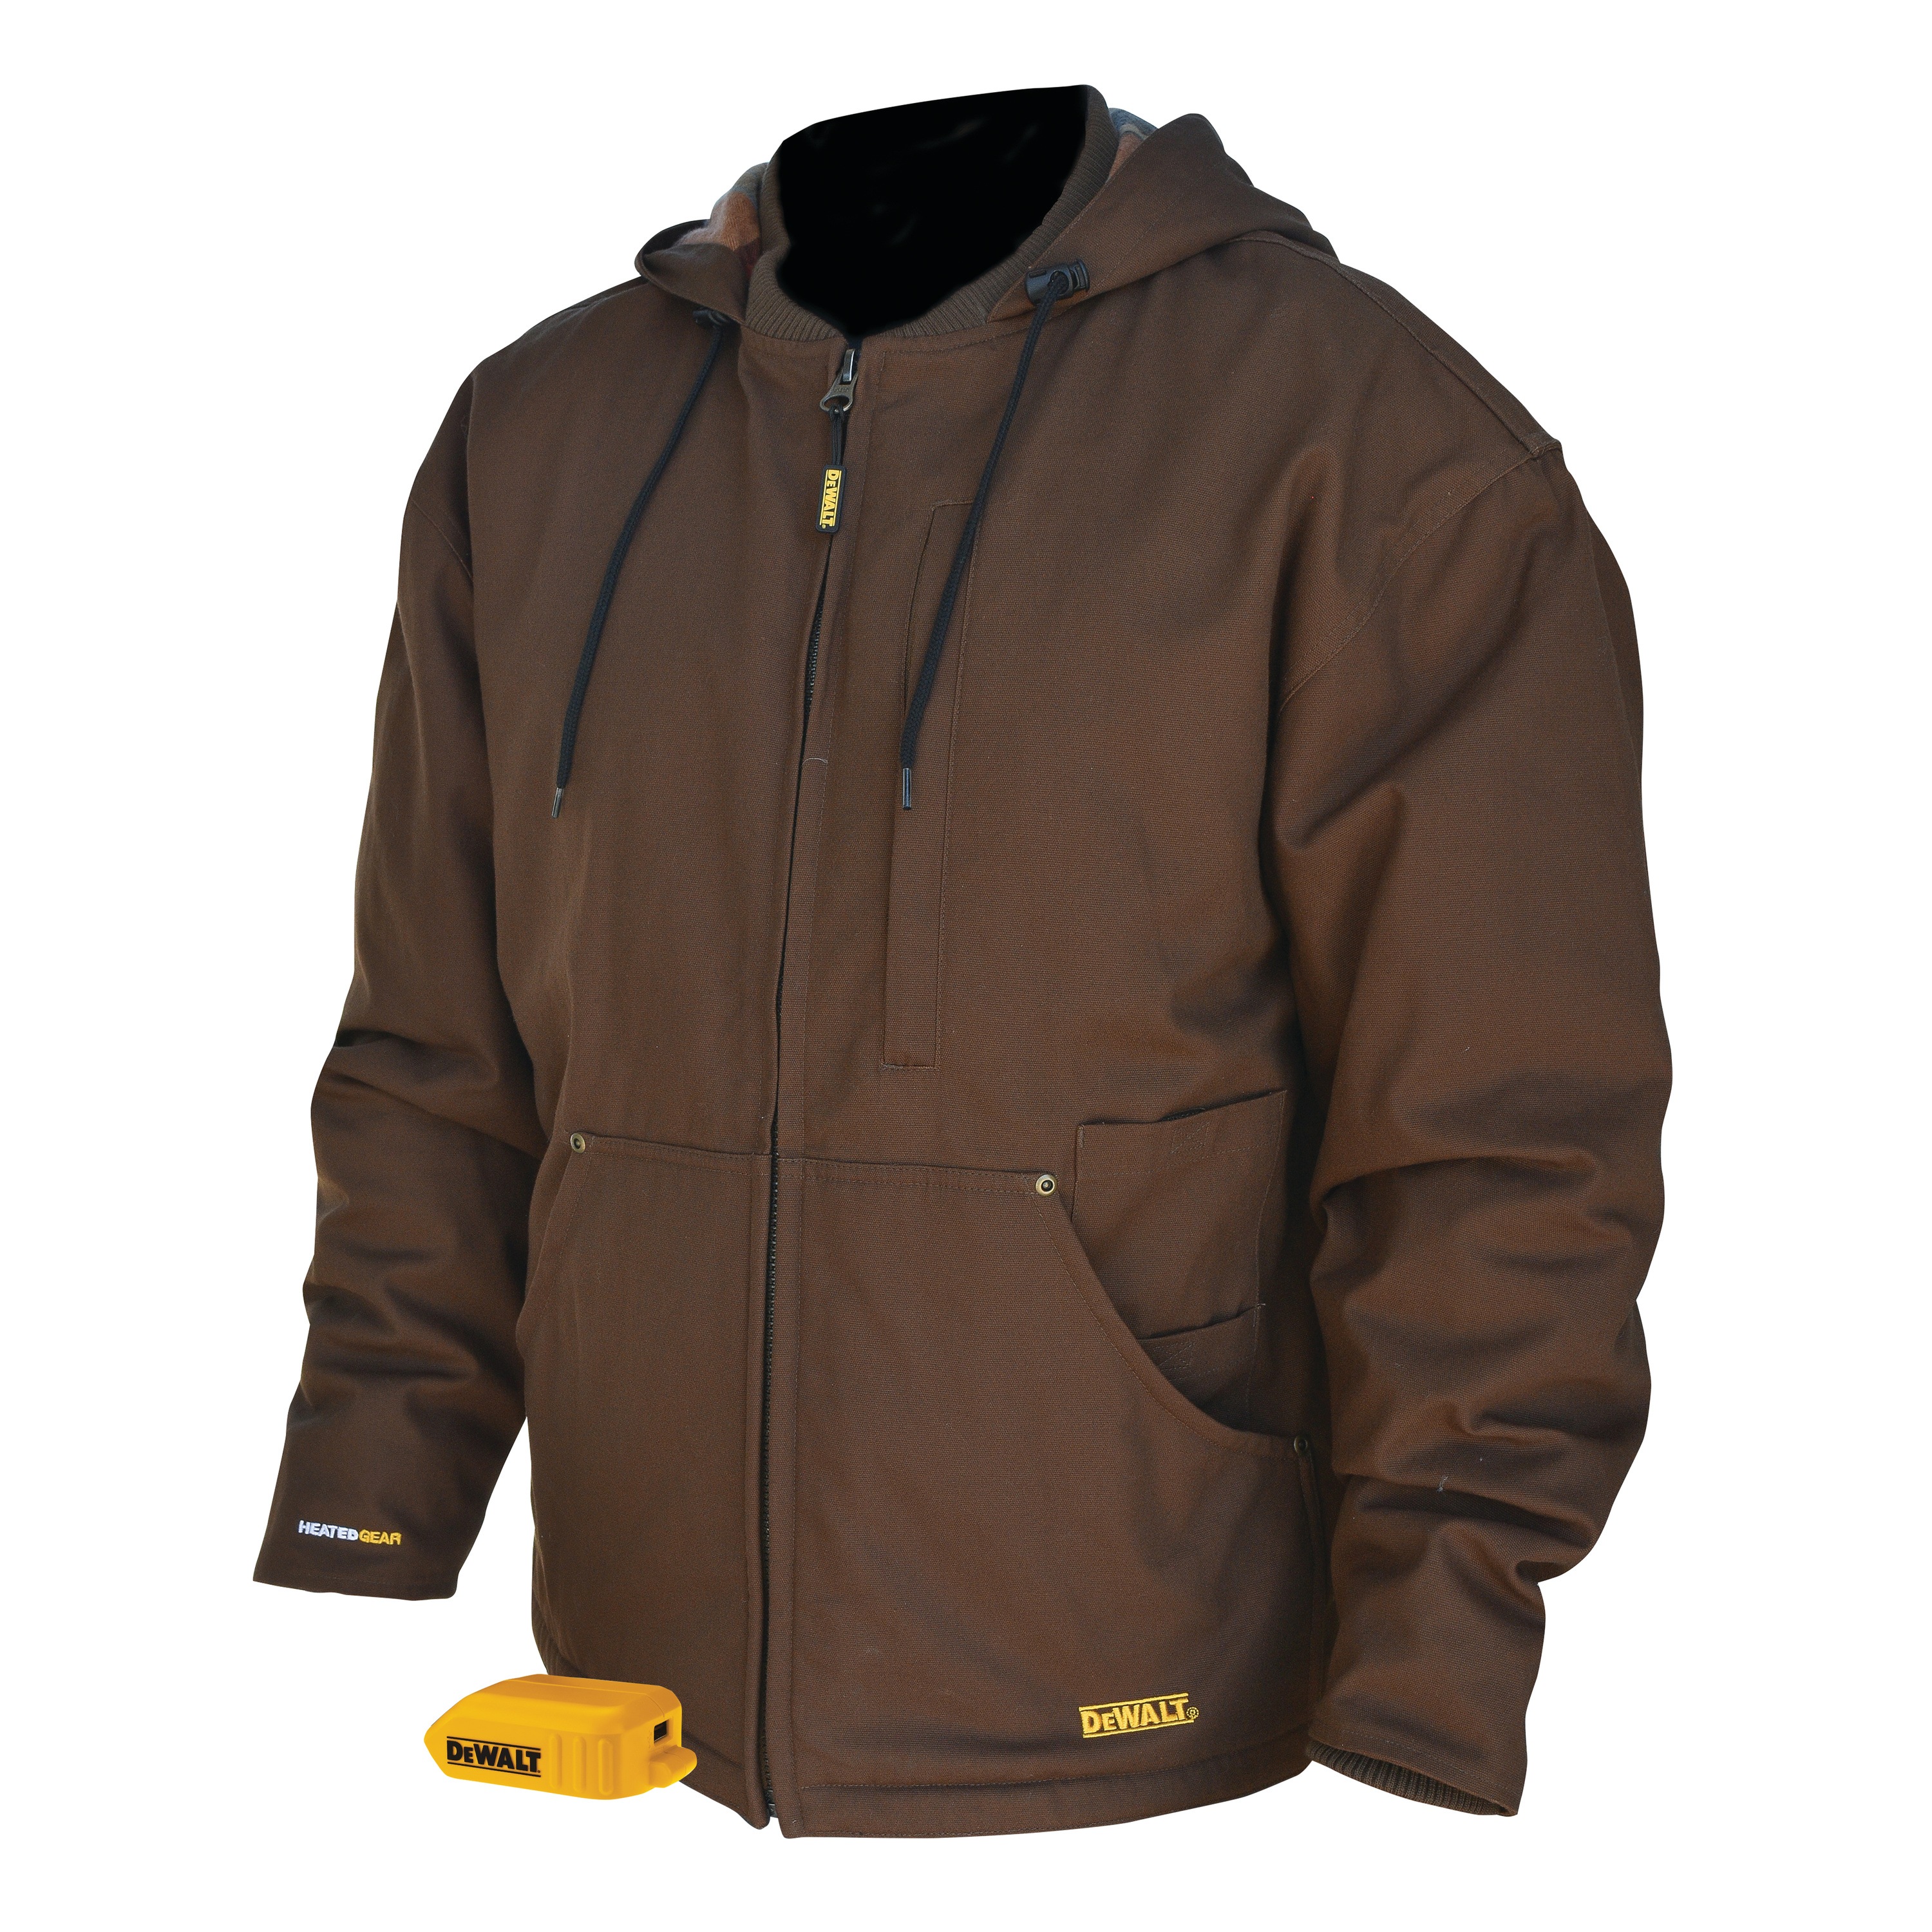 Profile of heavy duty, tobacco, heated work jacket